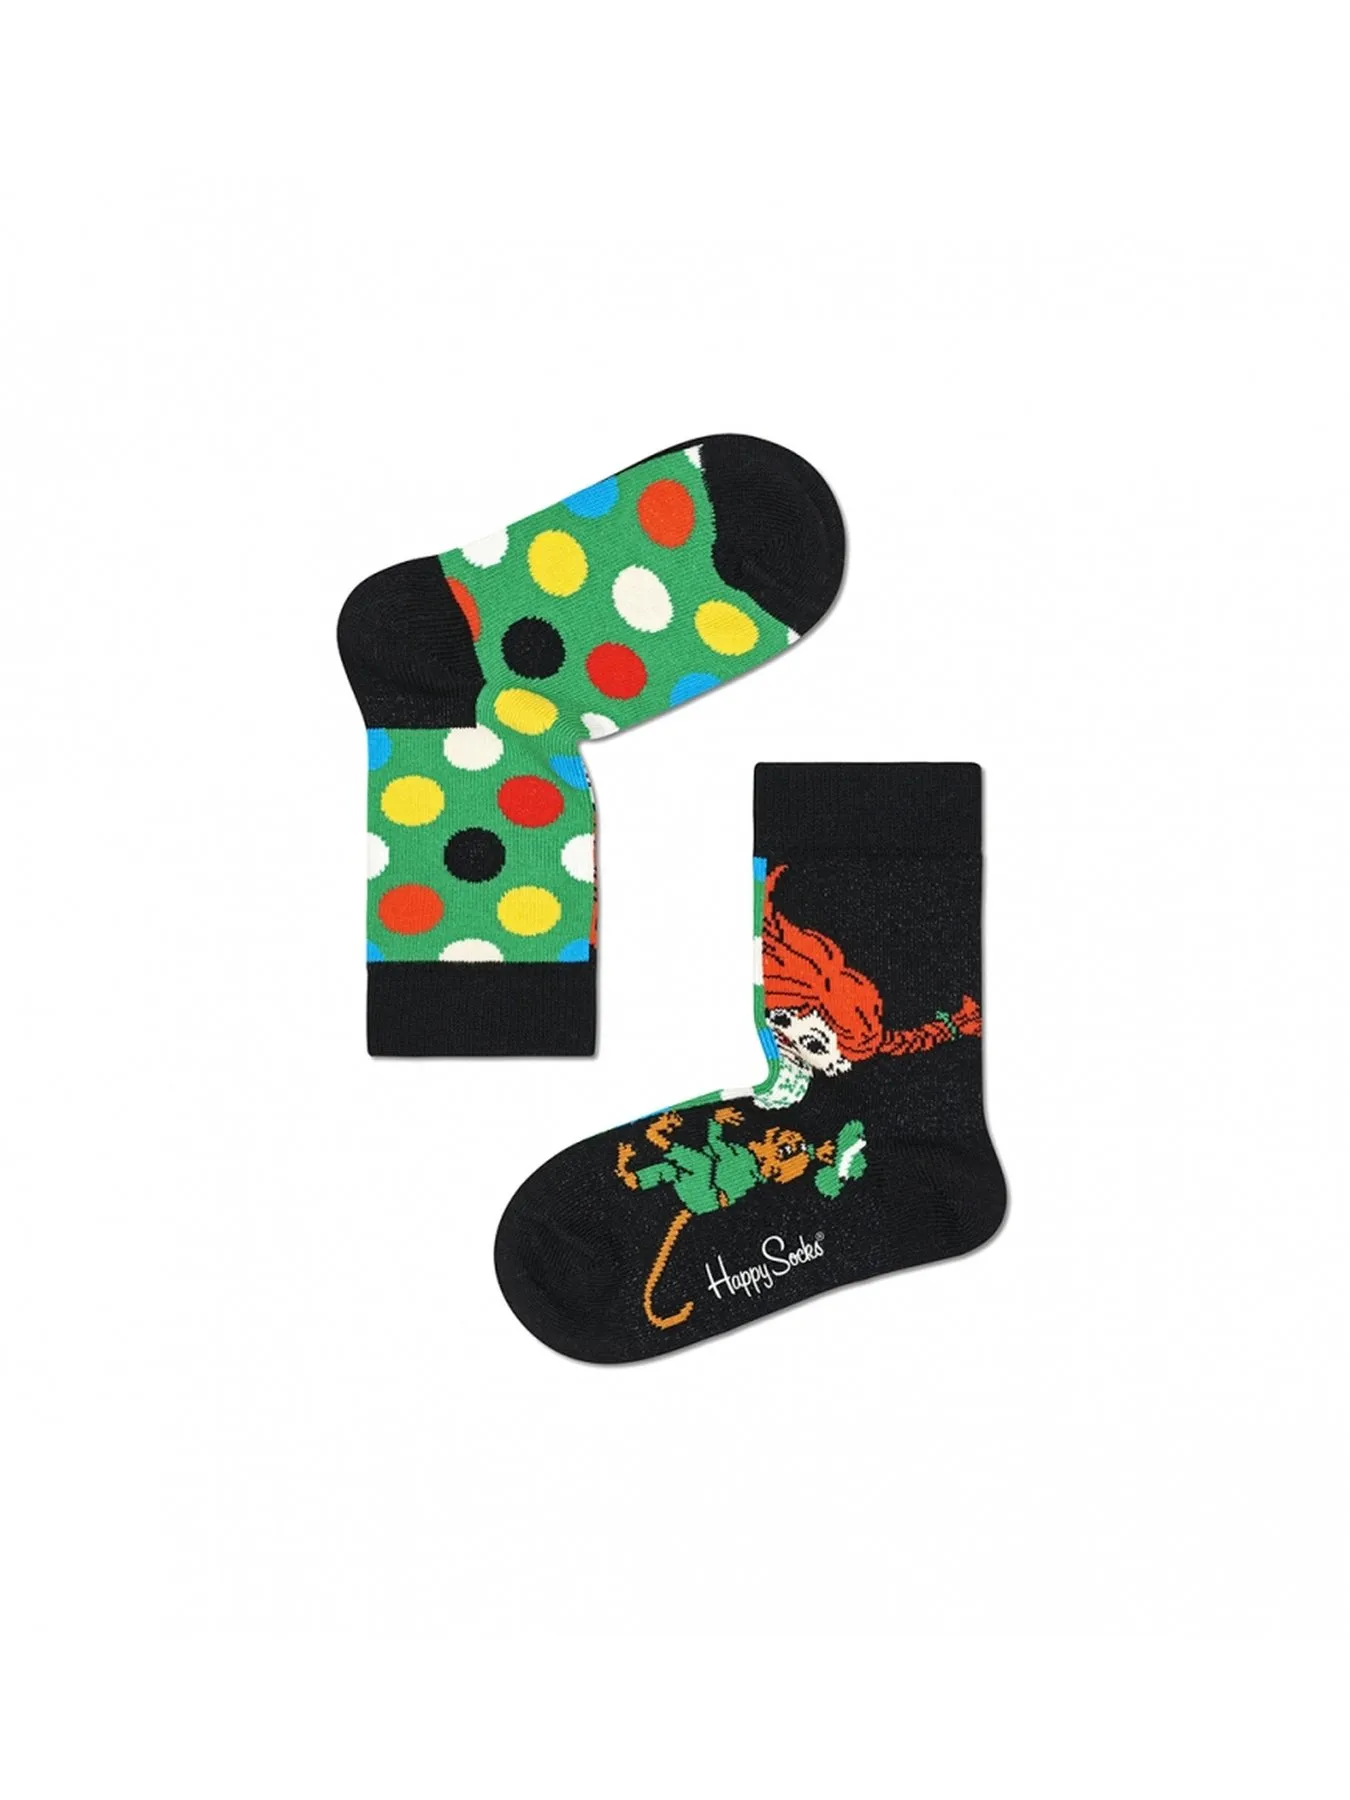 Pippi Longstocking socks